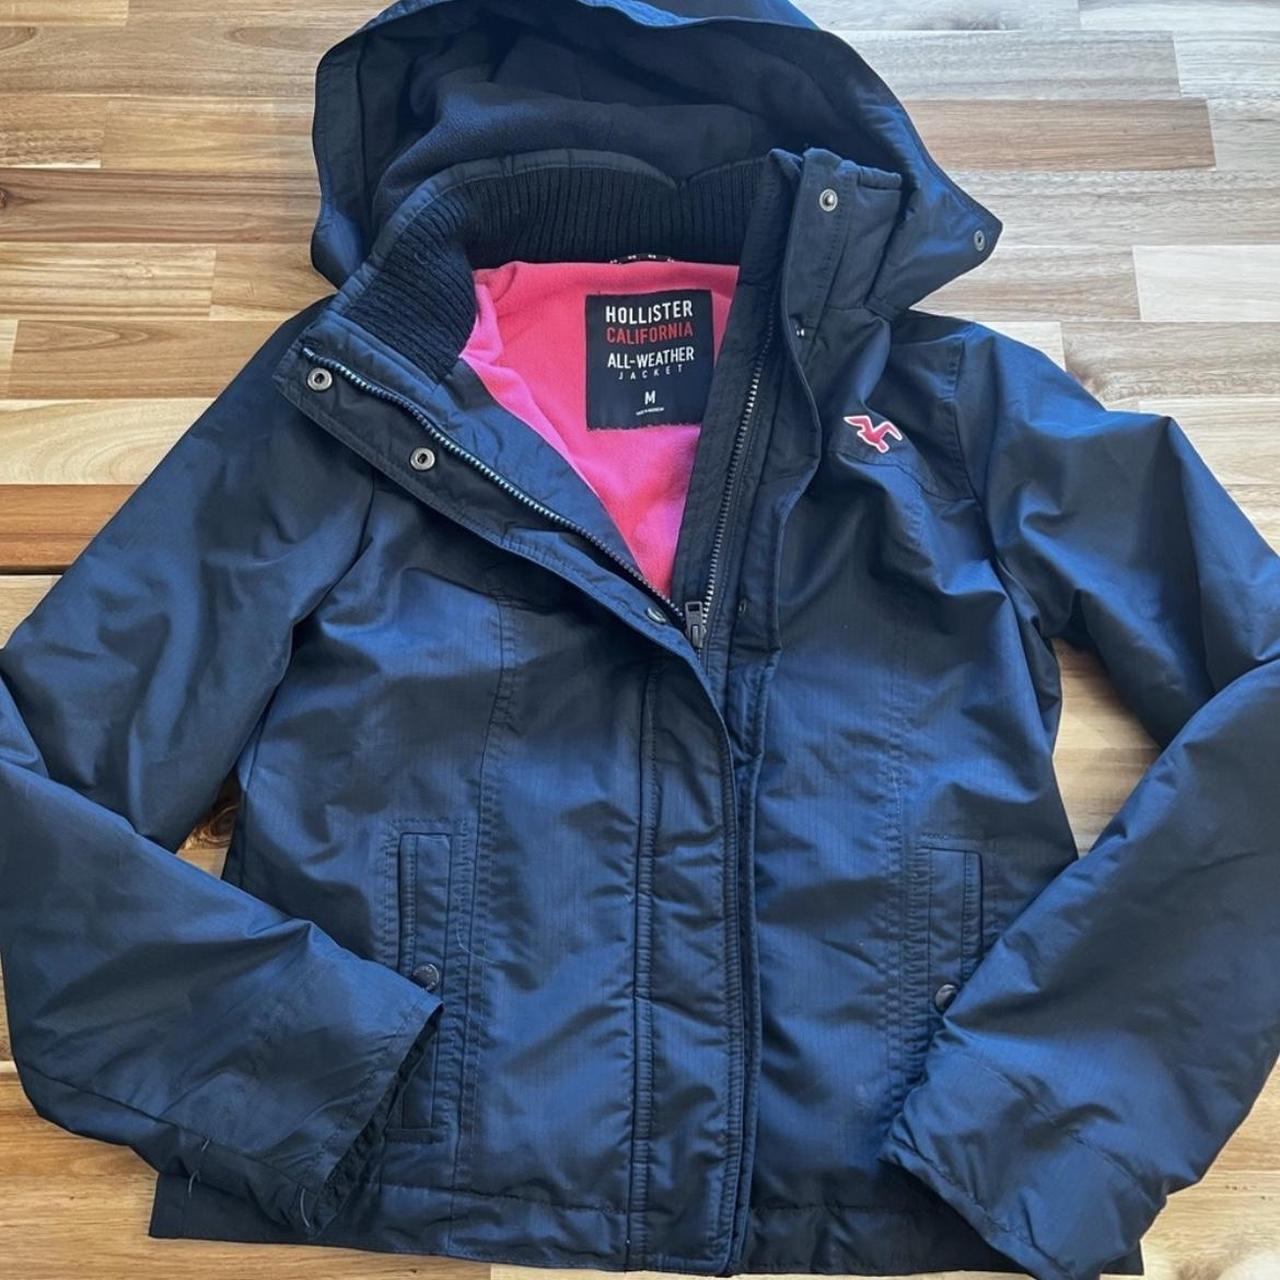 Hollister California All-Weather Women’s Hood Jacket Green Pink Fleece Size  XS